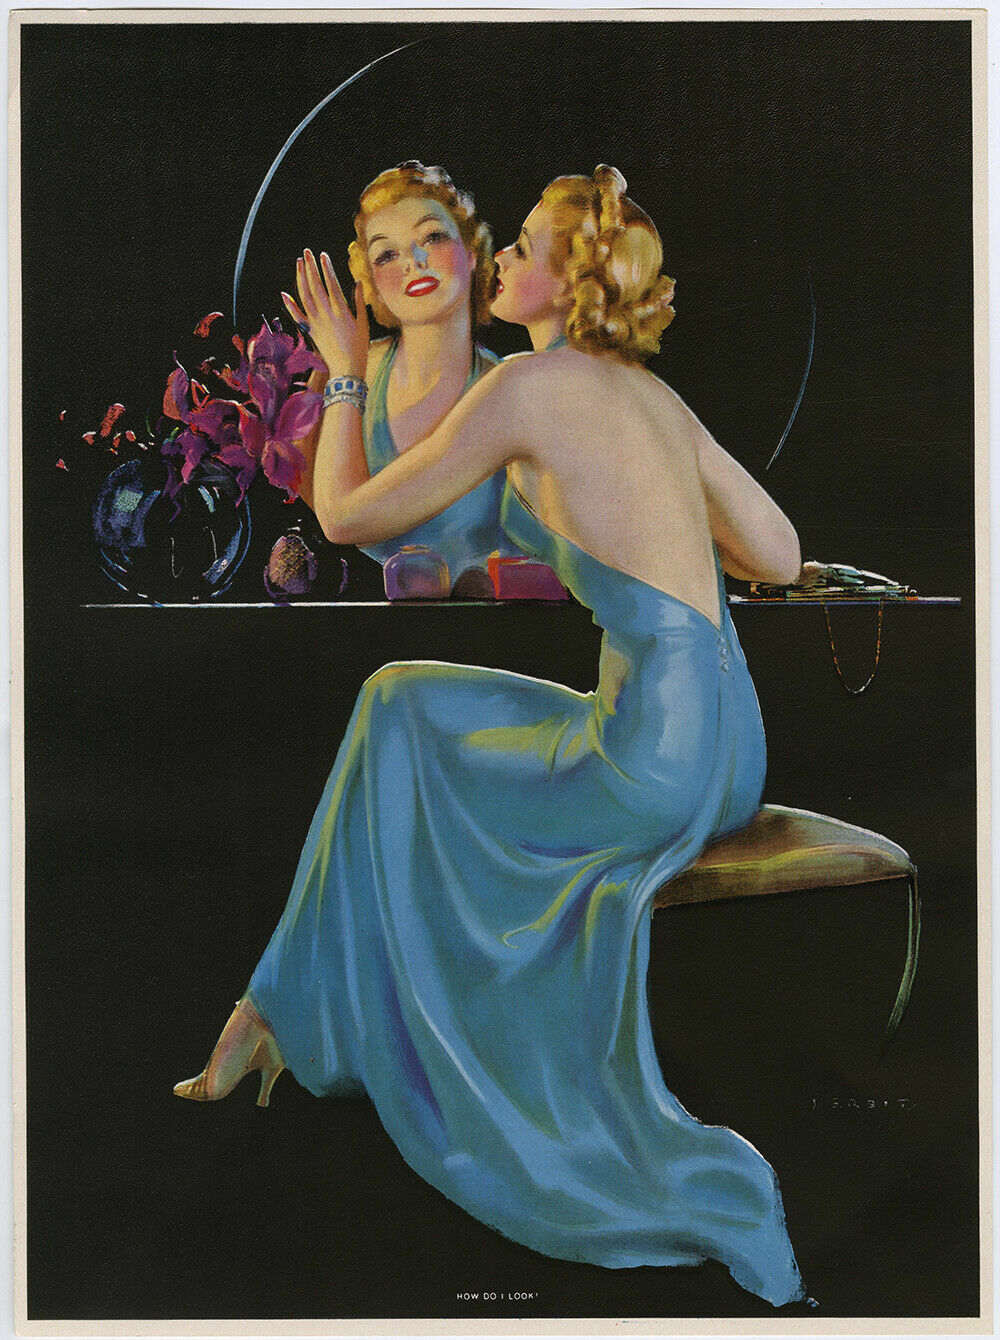 Original 1940s Jules Erbit Pin-Up Print Vain Blonde Beauty Asks How Do I Look?